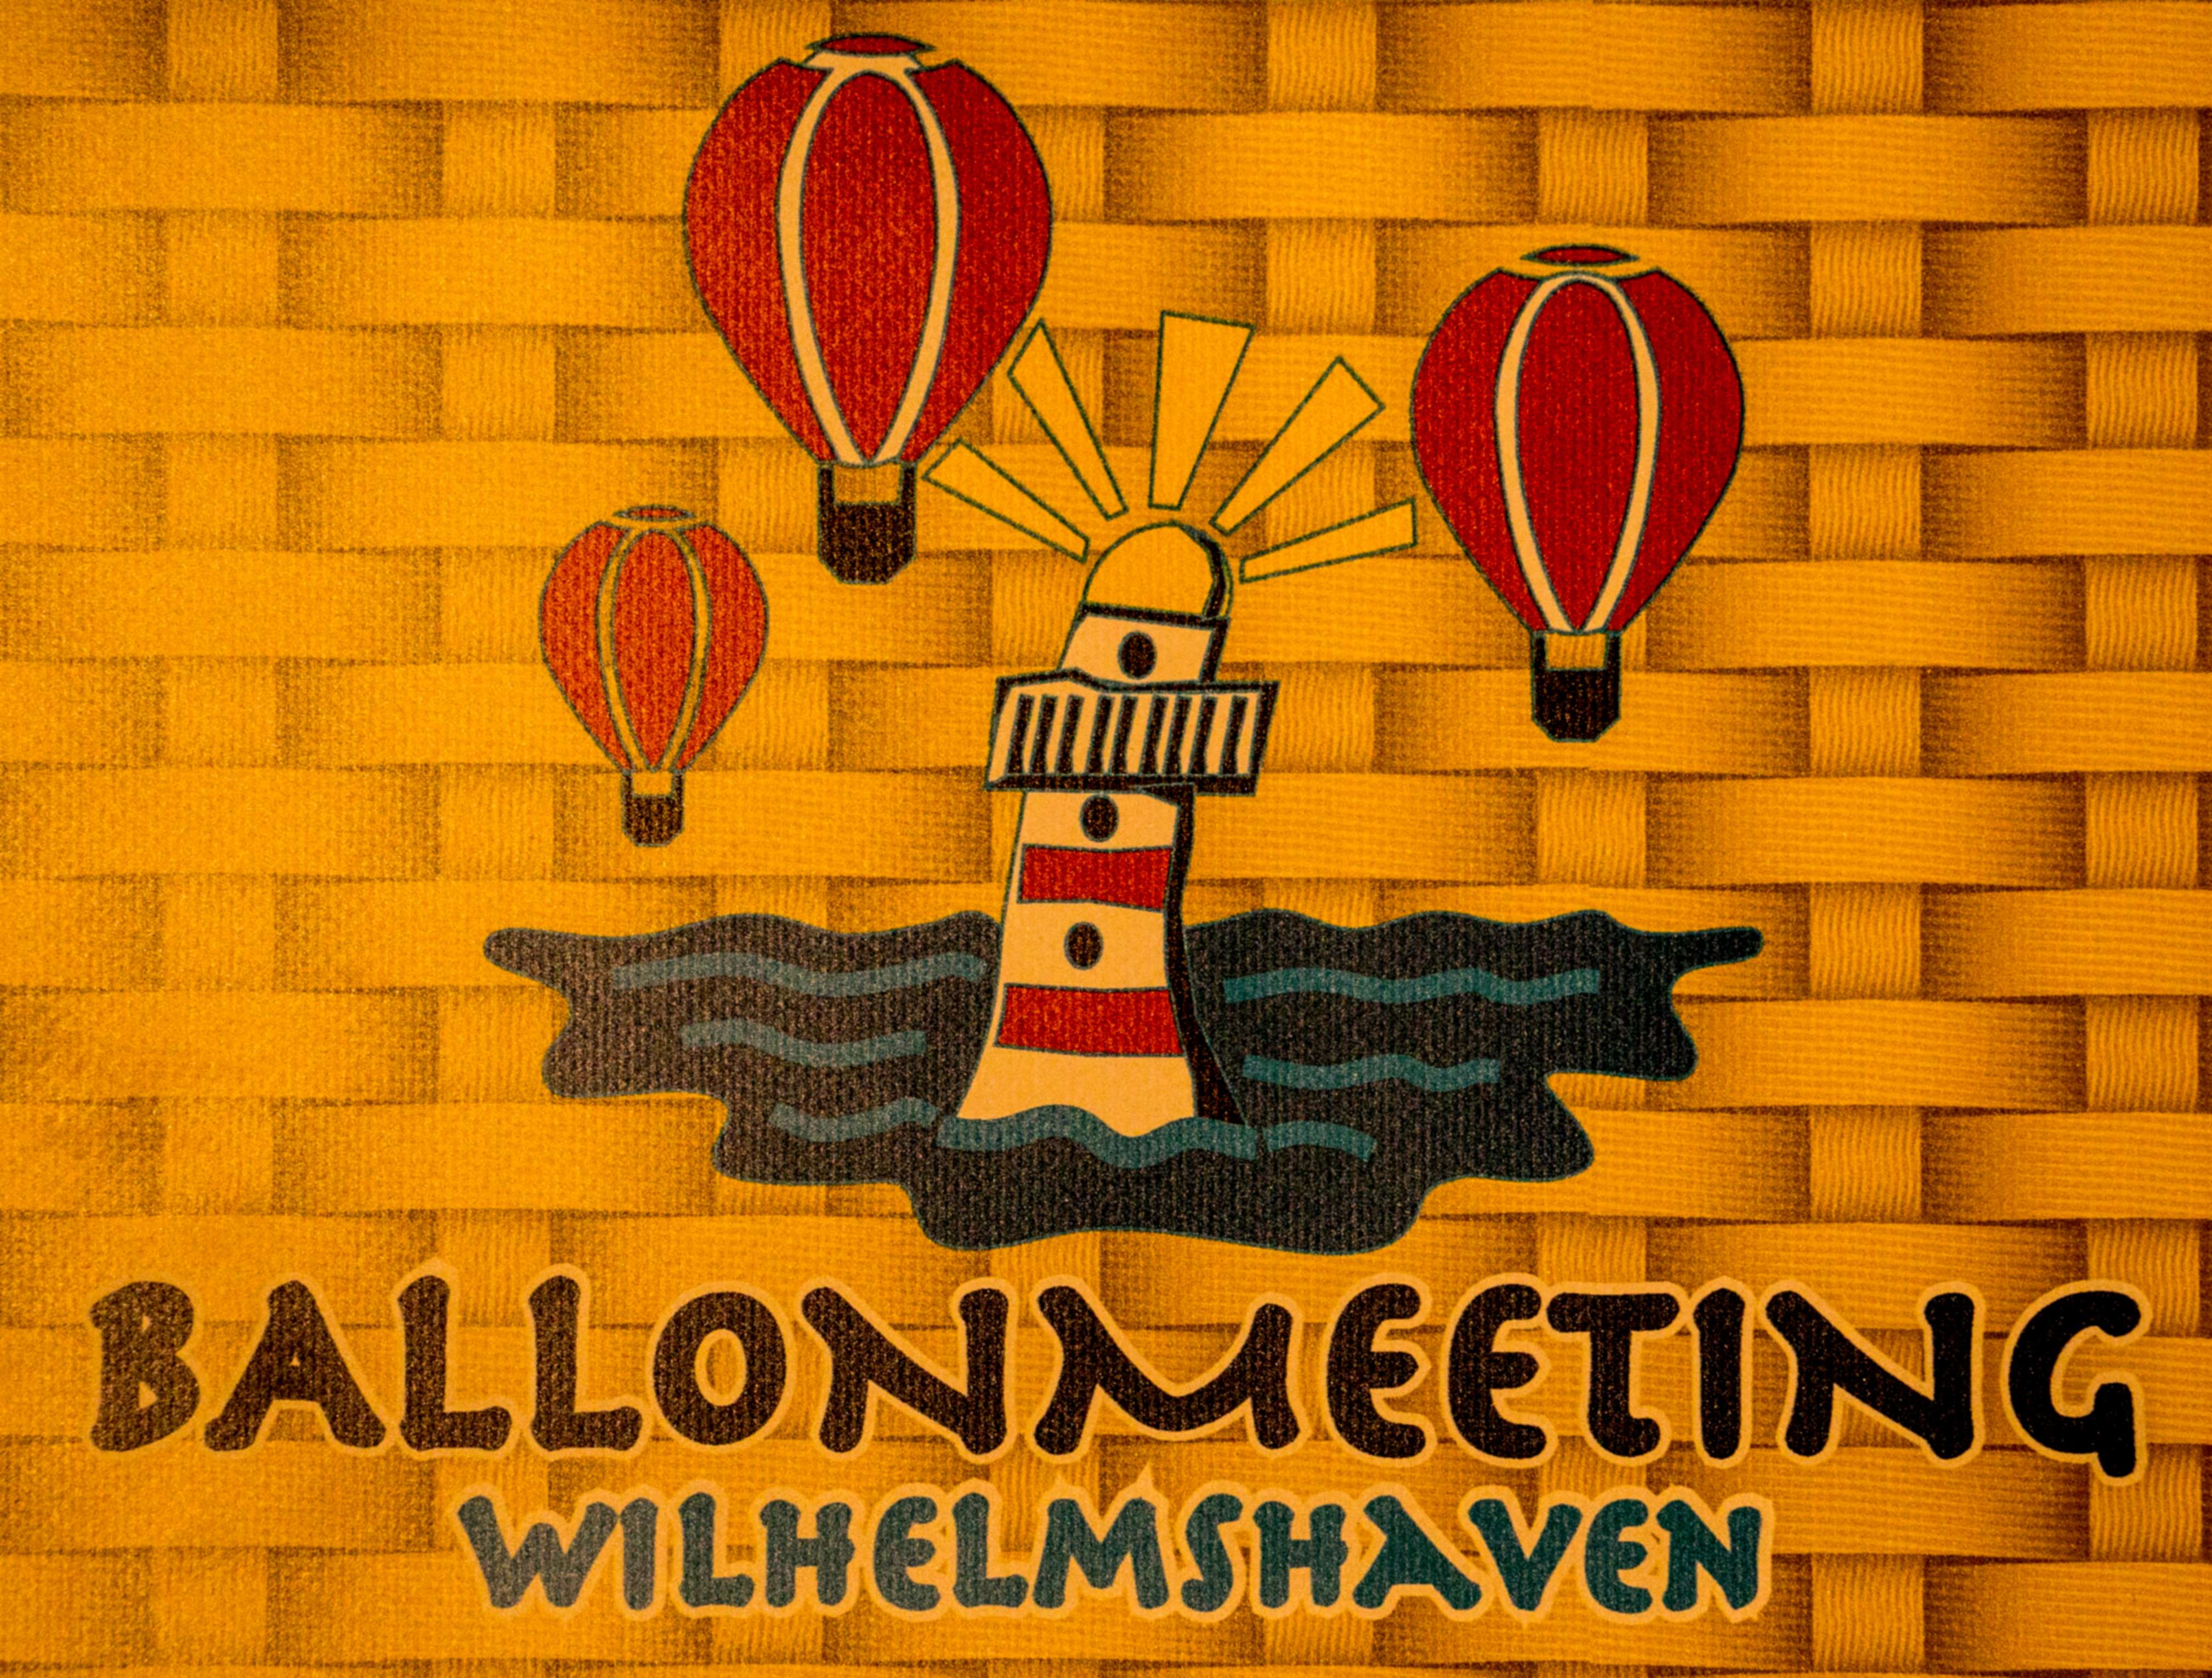 Ballonmeeting Wilhelmshaven 2017